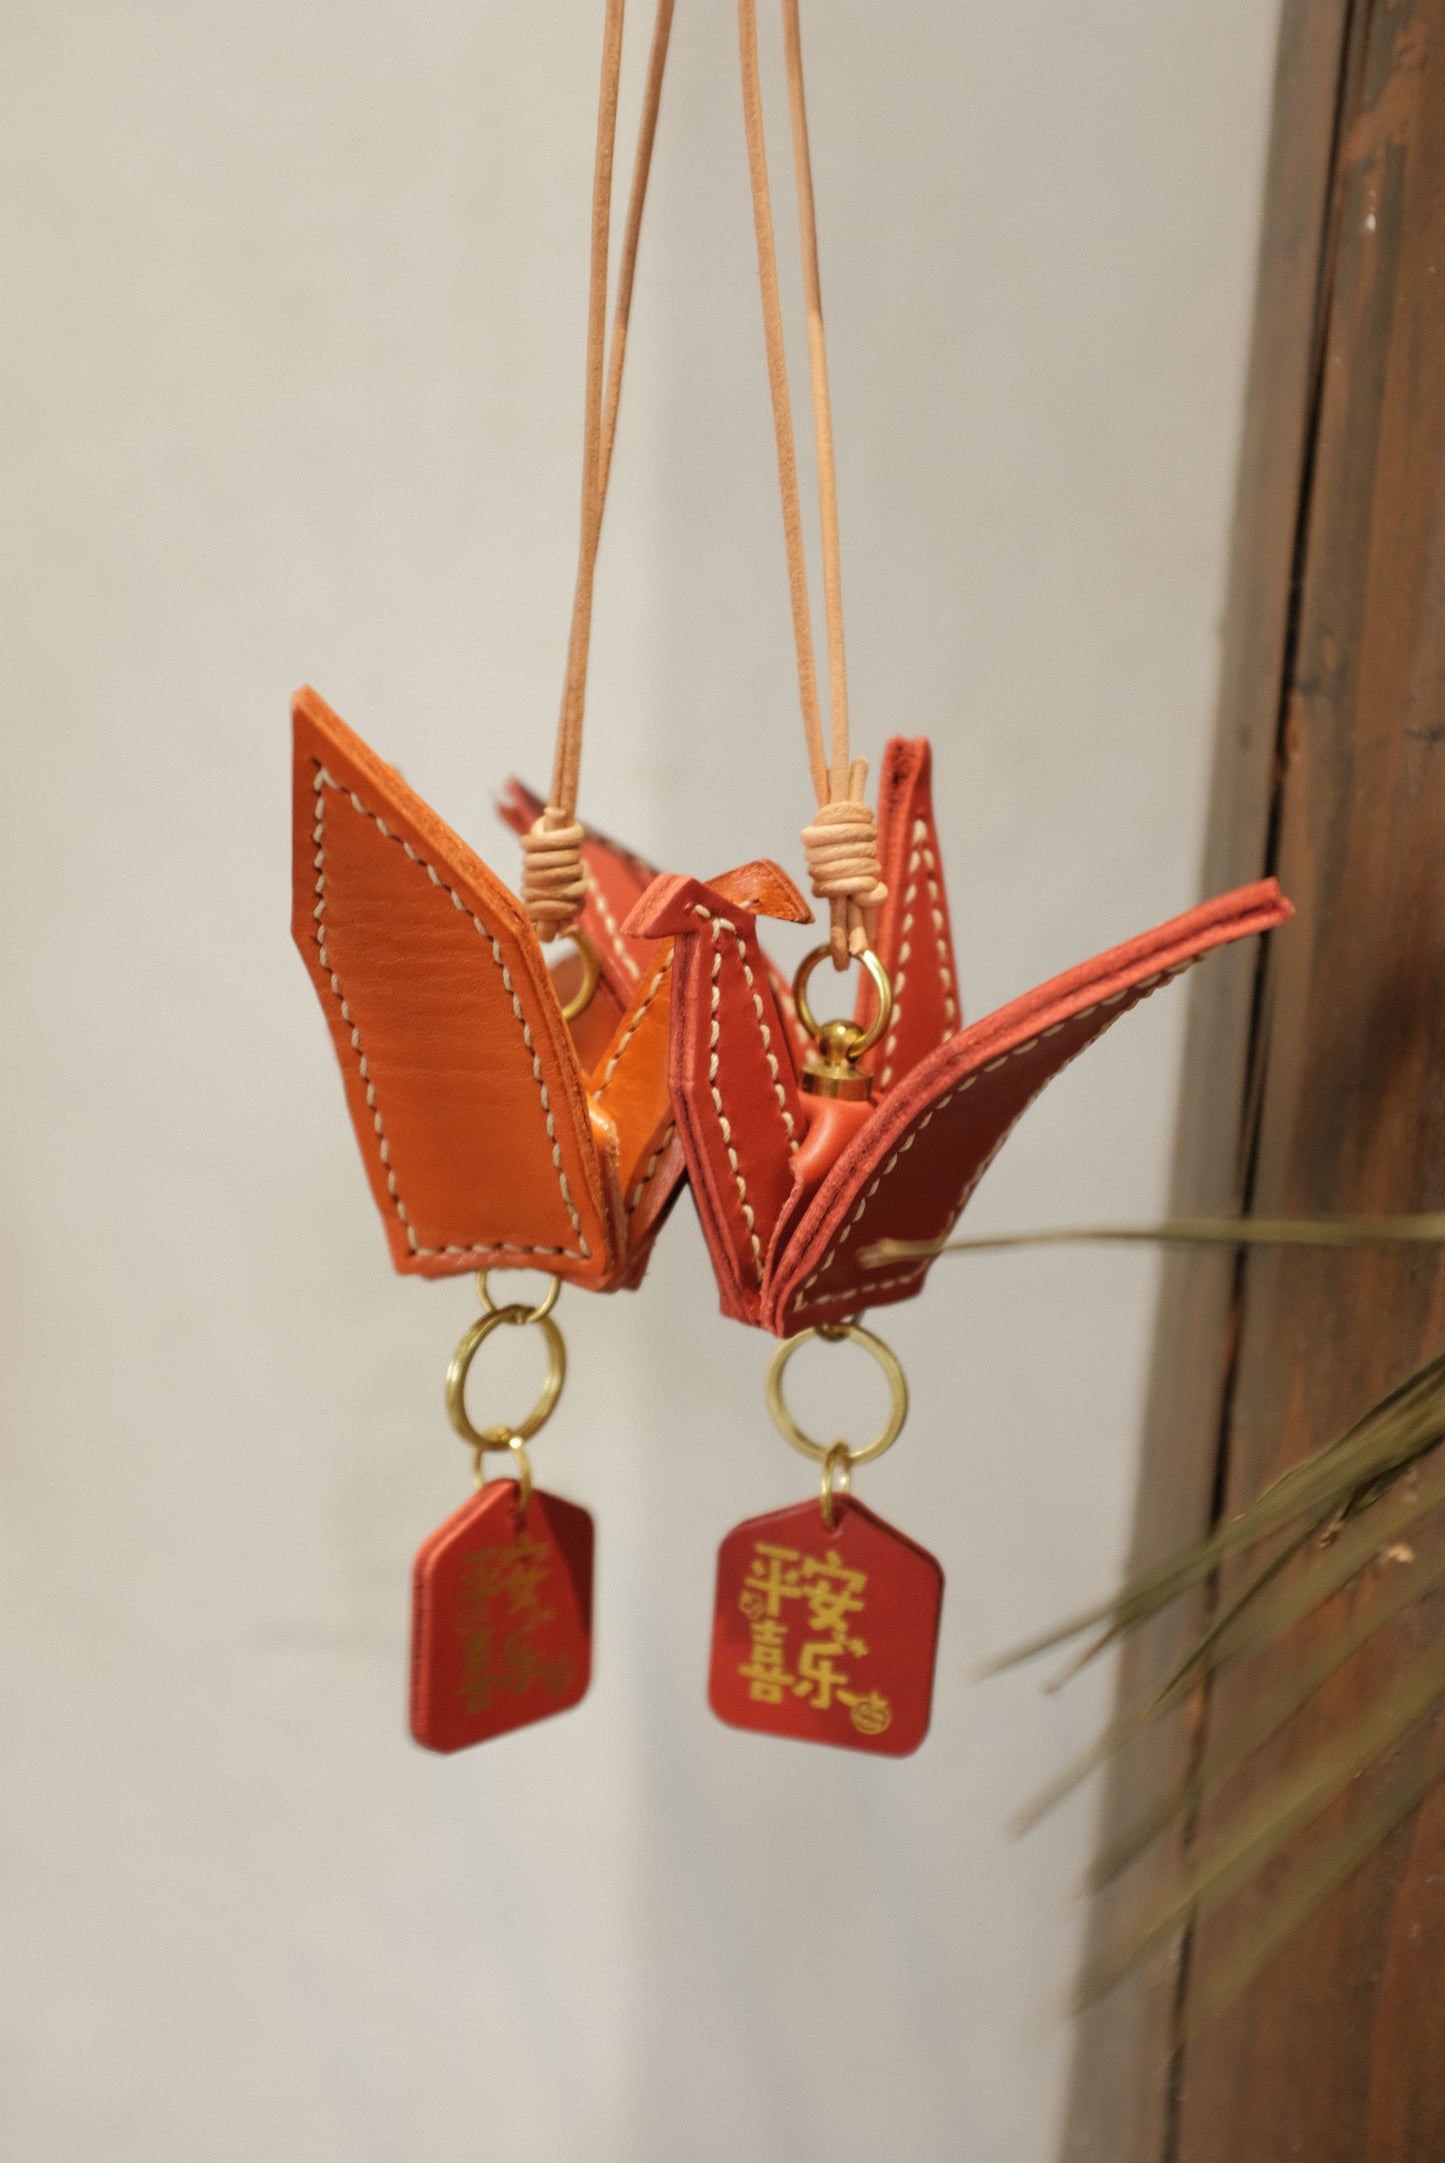 Leather crane ornaments